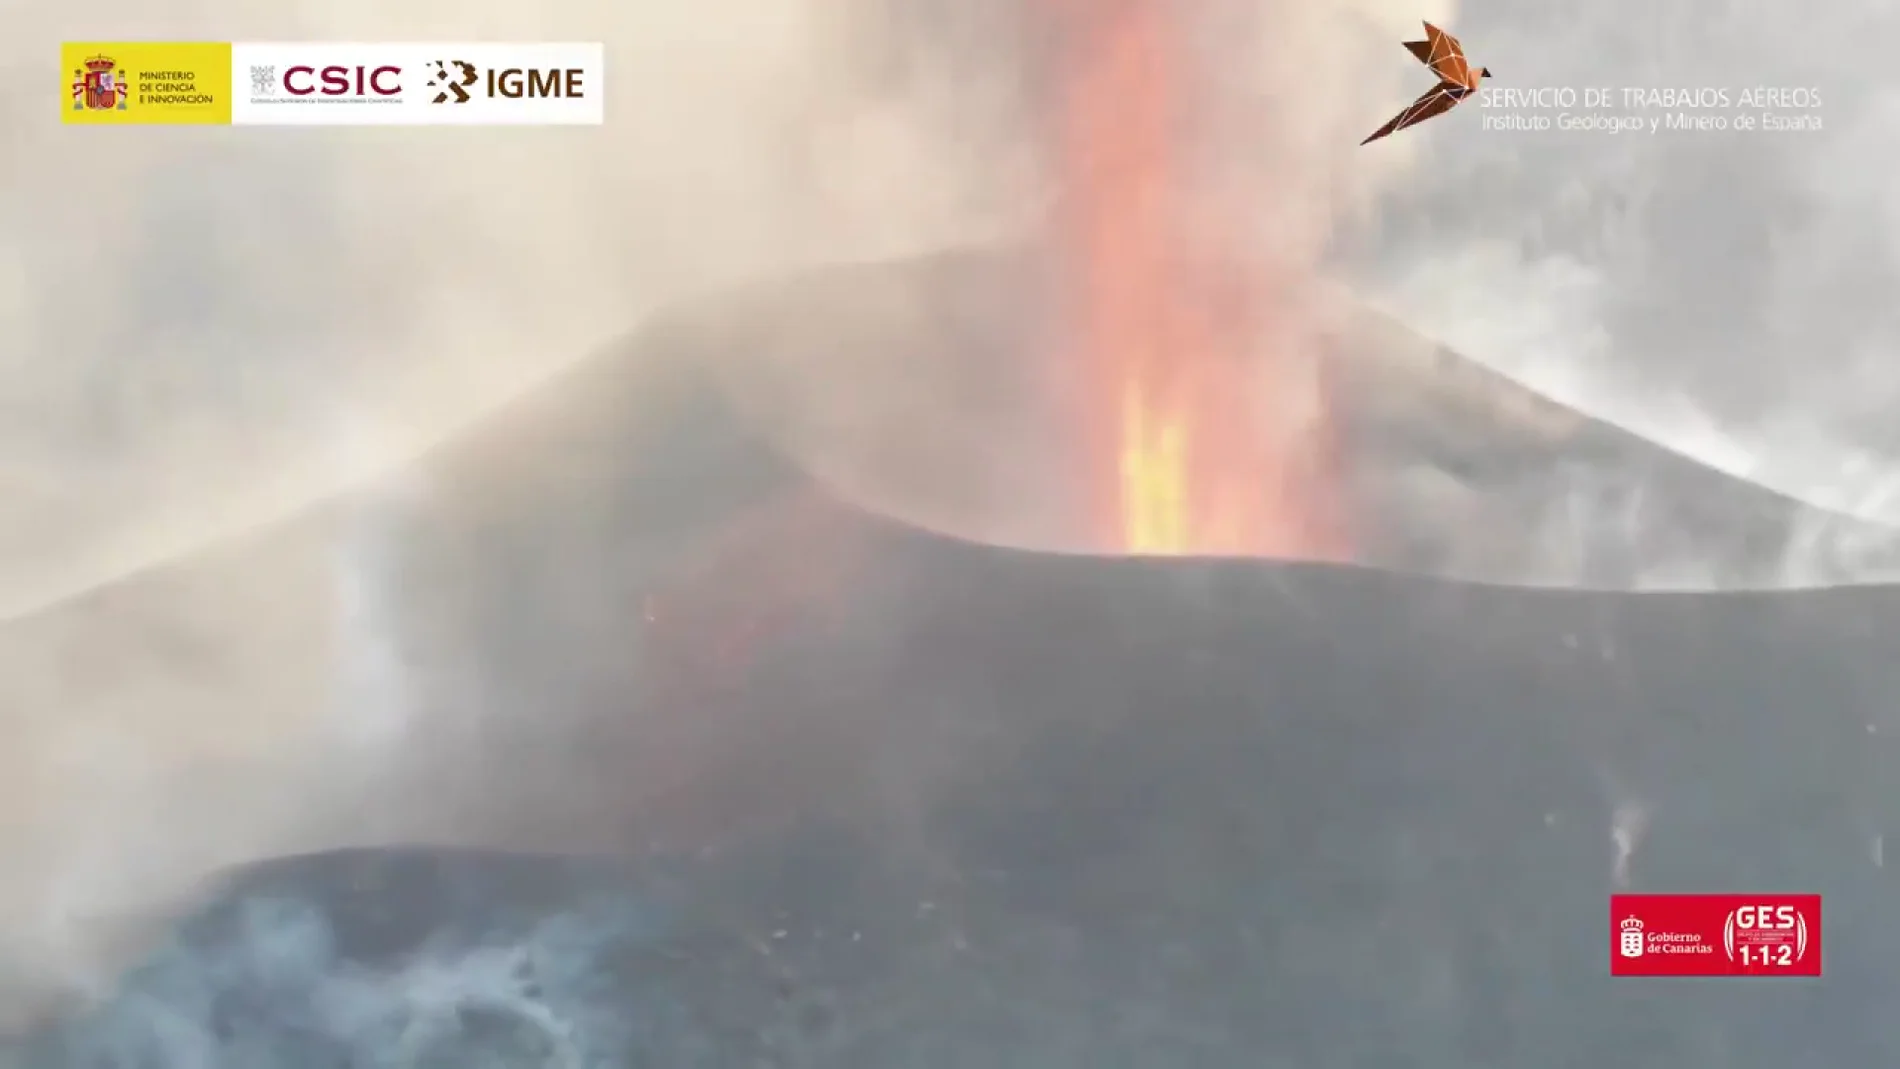 La espectacular imagen de la boca del volcán de La Palma grabada por un dron del CSIC